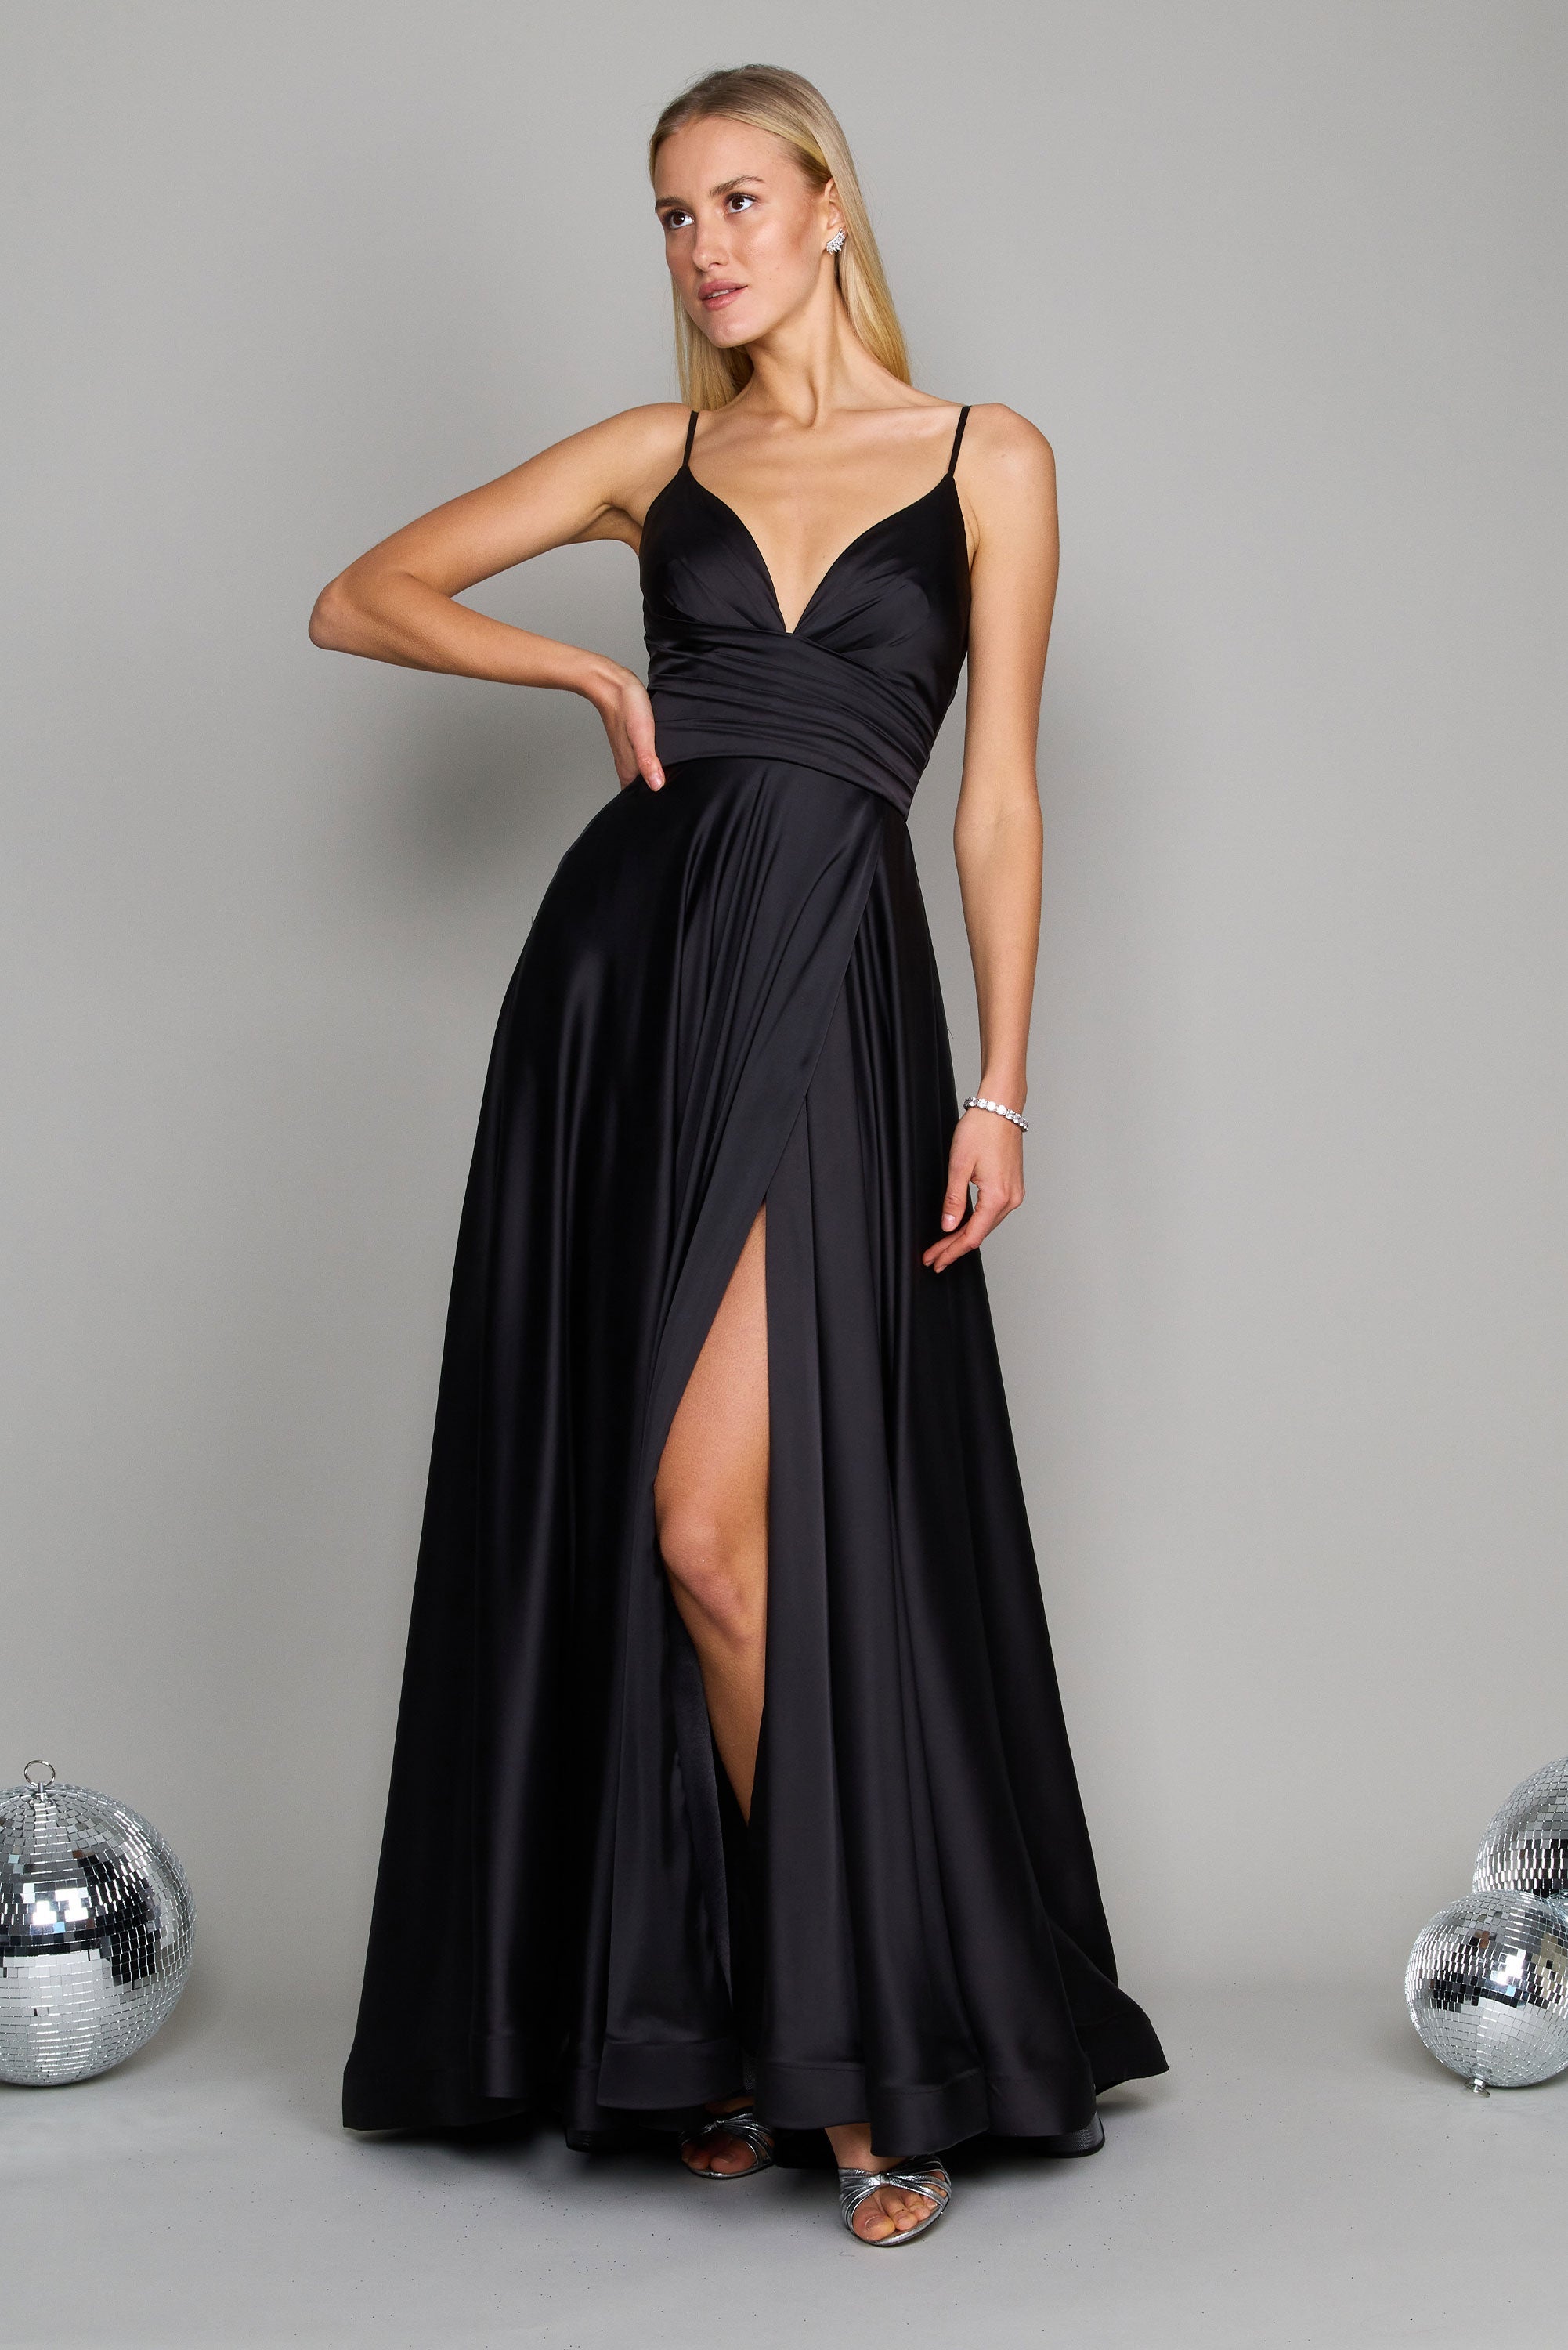 black satin dress with slit